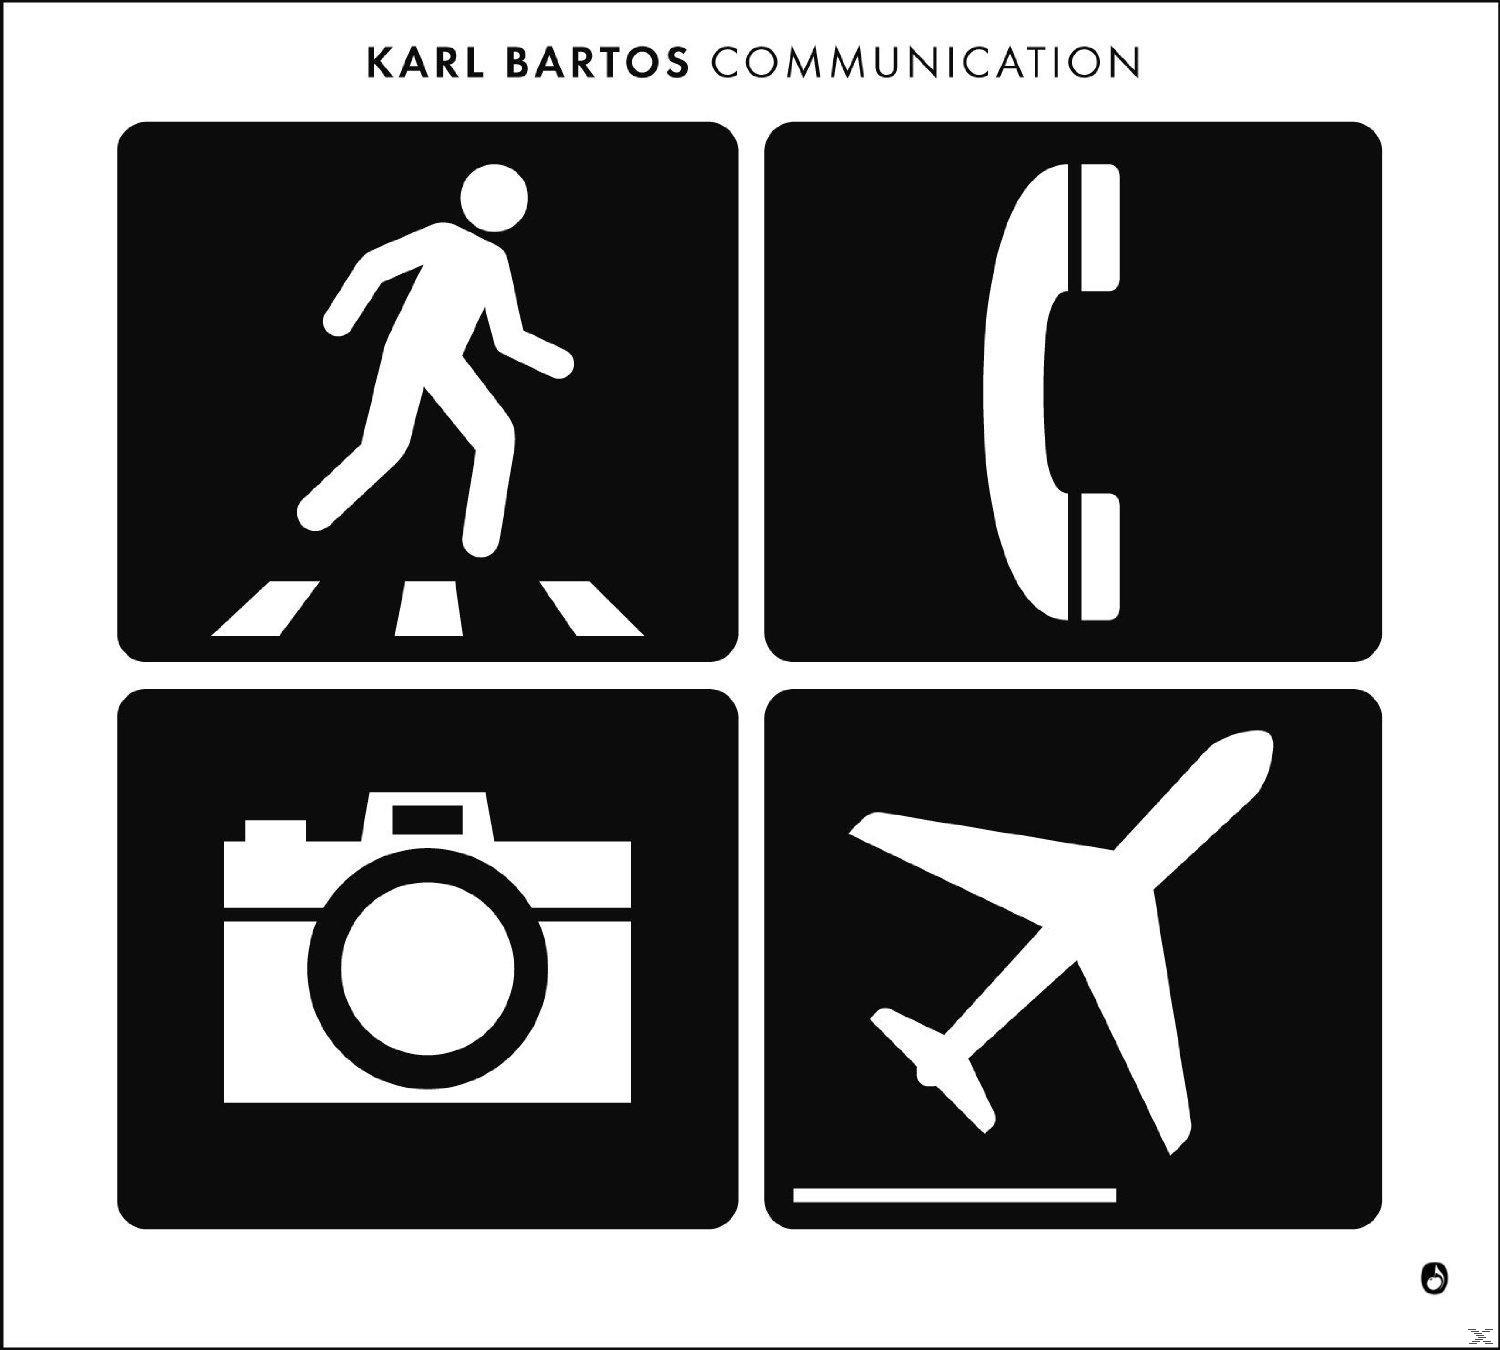 Karl - Bartos (CD) - Communication